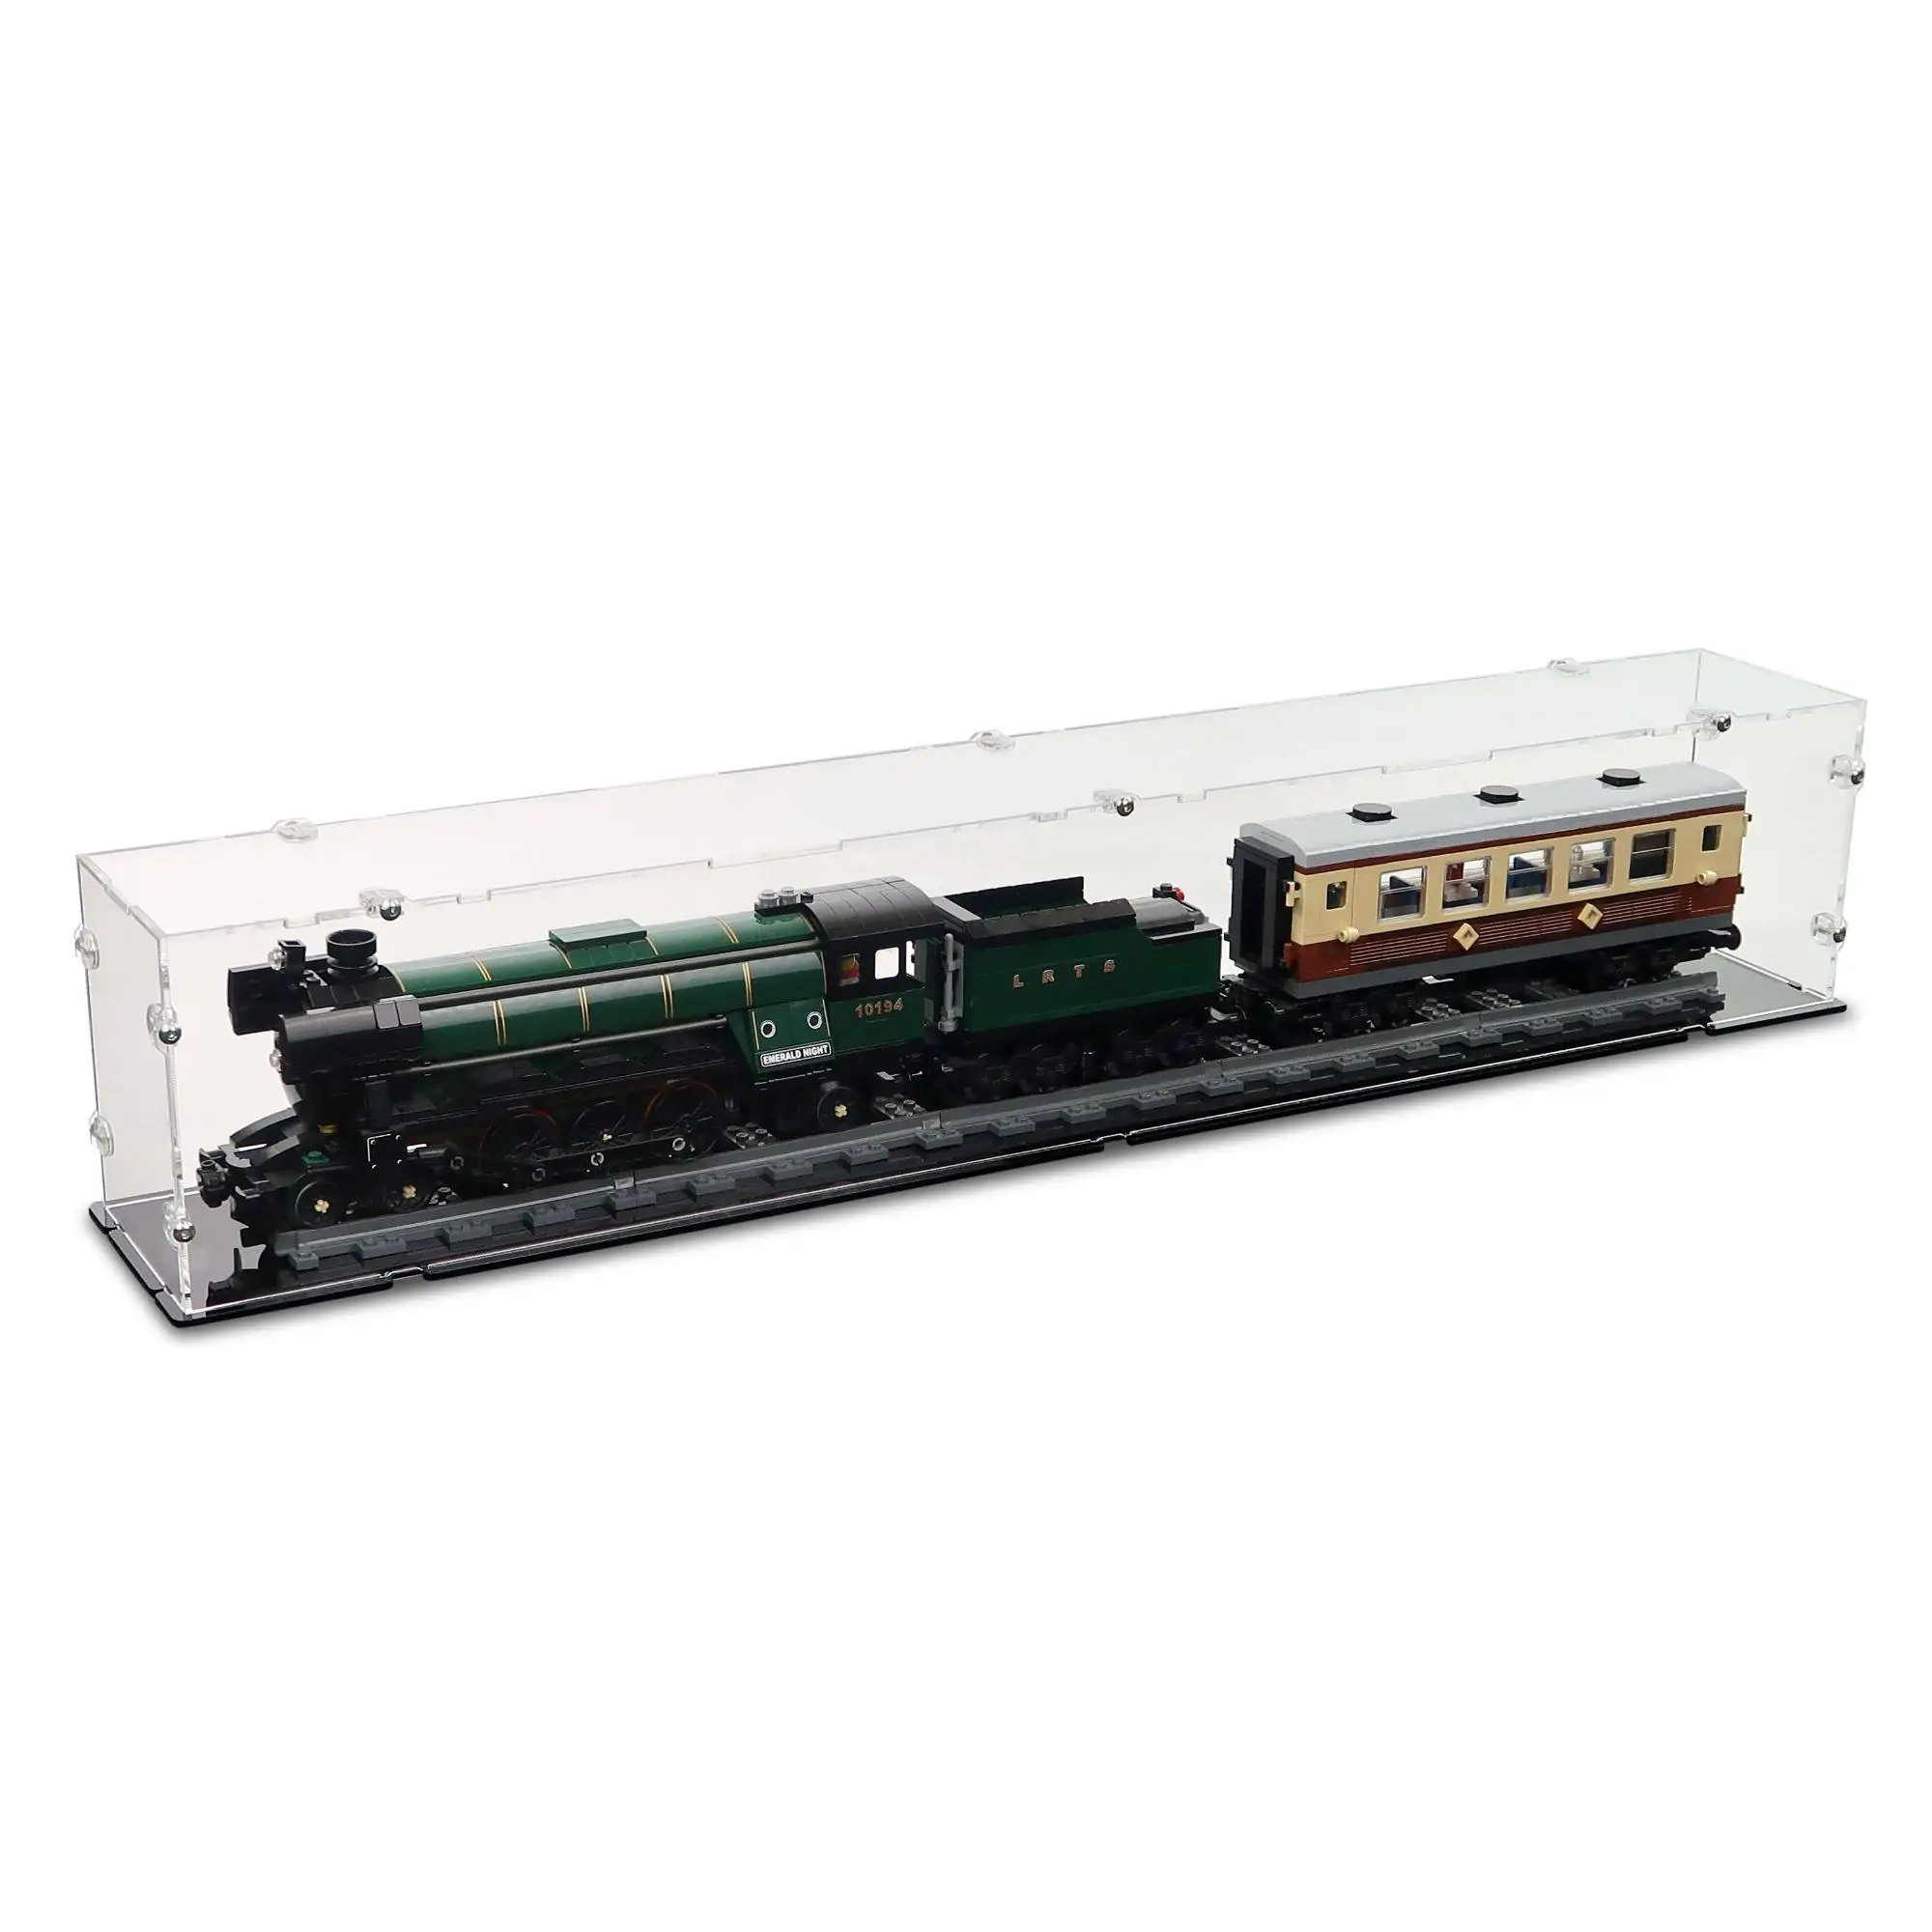 Lego Creator 10233 Horizon Express Train Retired Item The Best Reasonable  Price